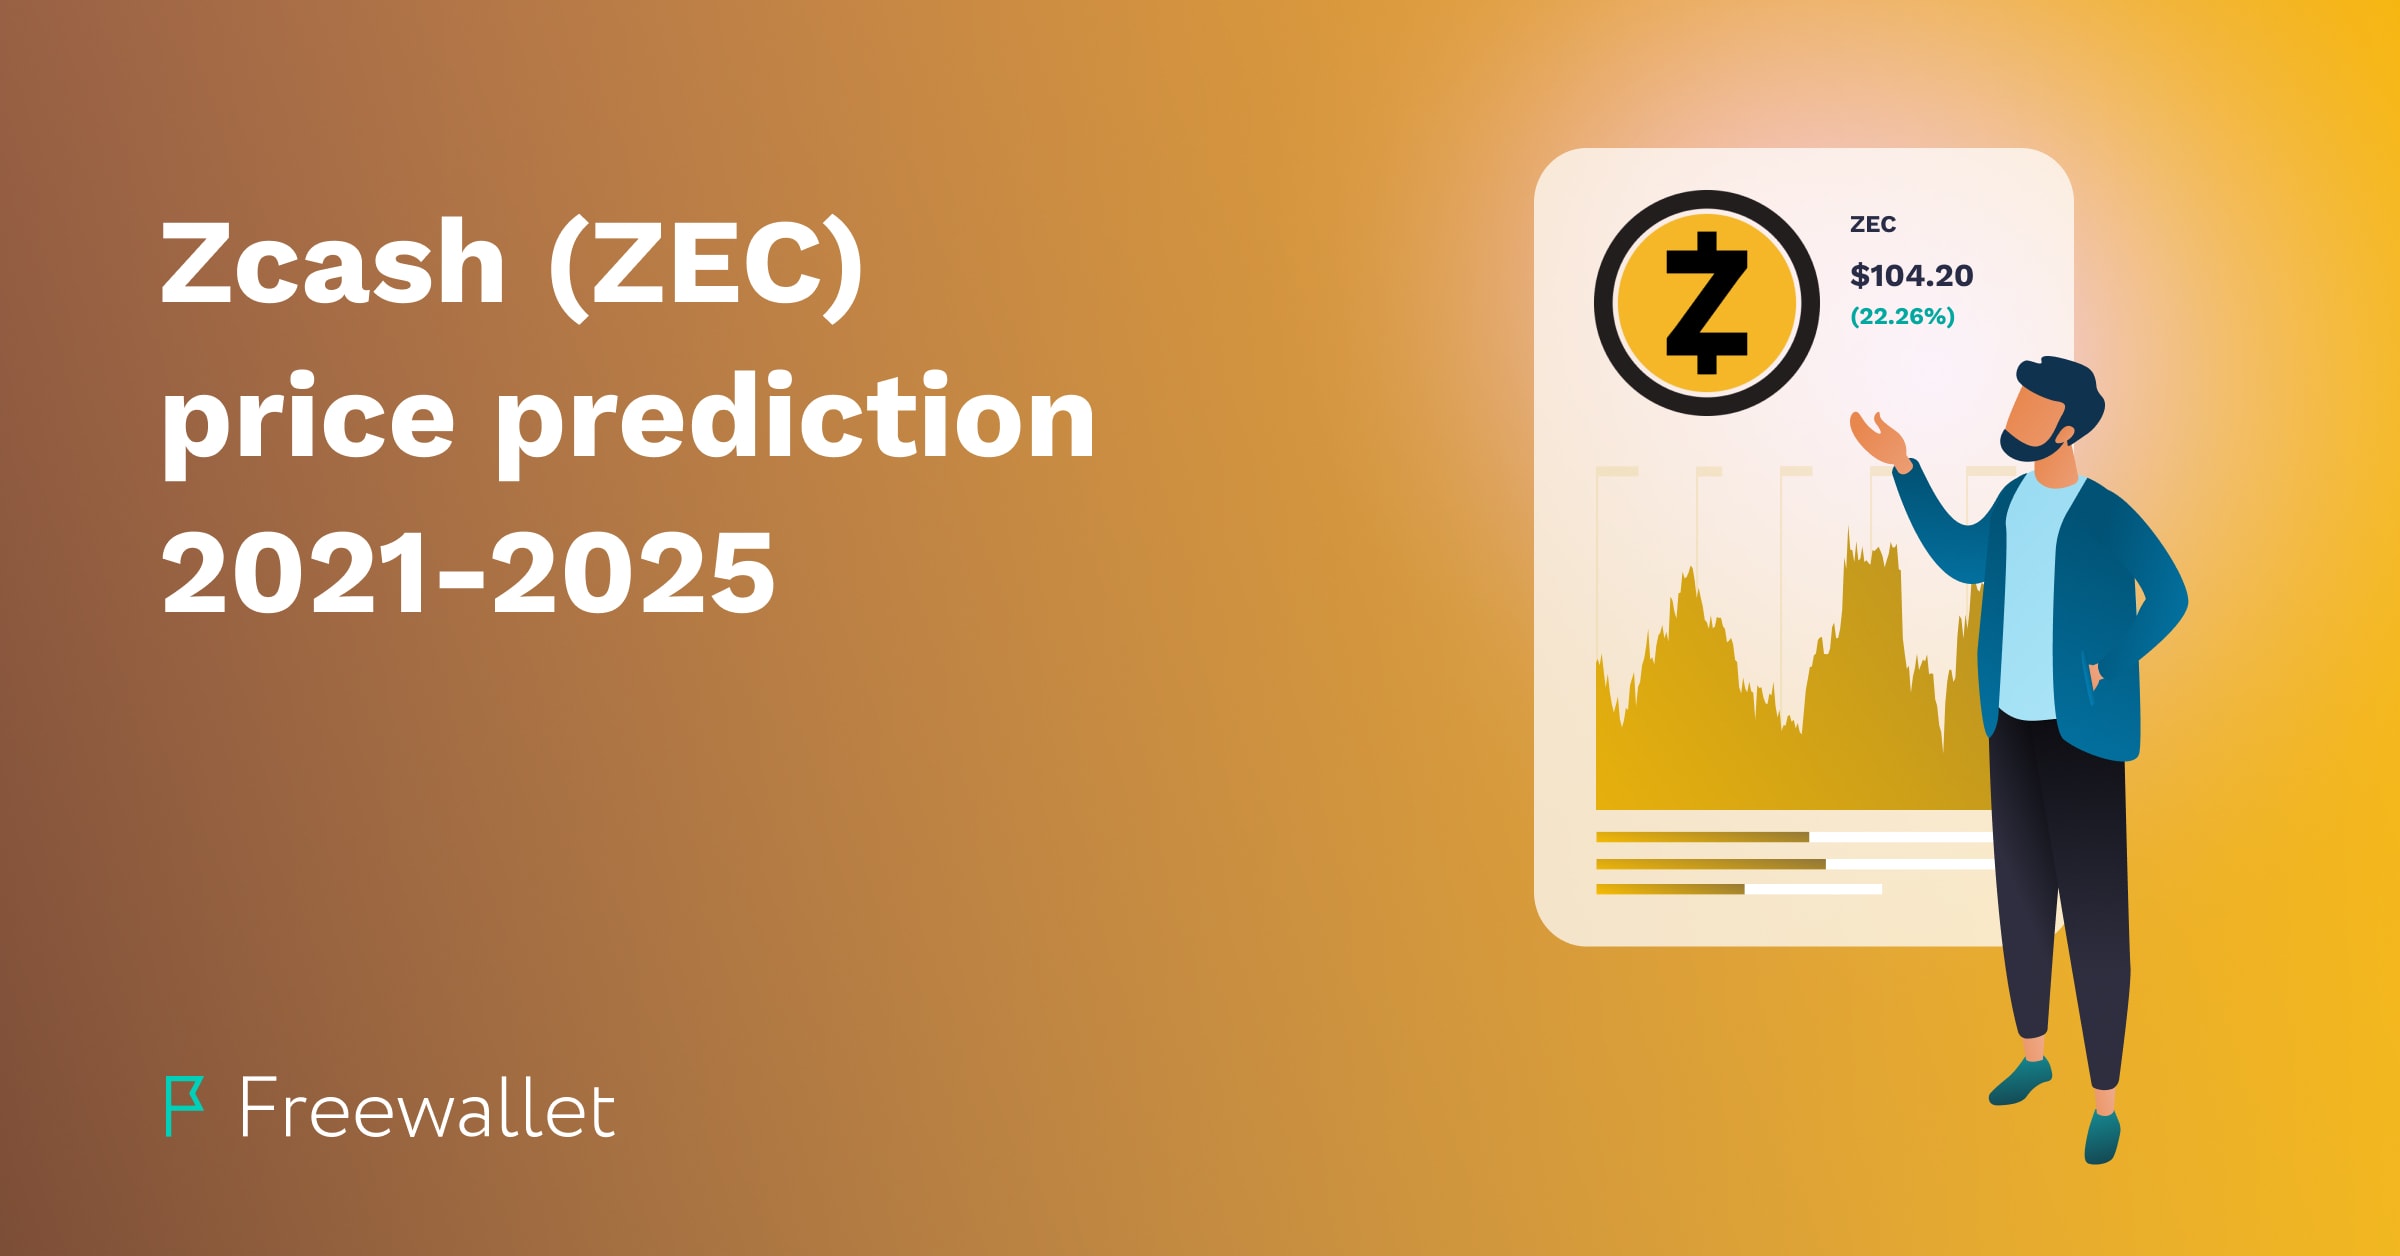 Zcash (ZEC) Price Prediction 2021-2025